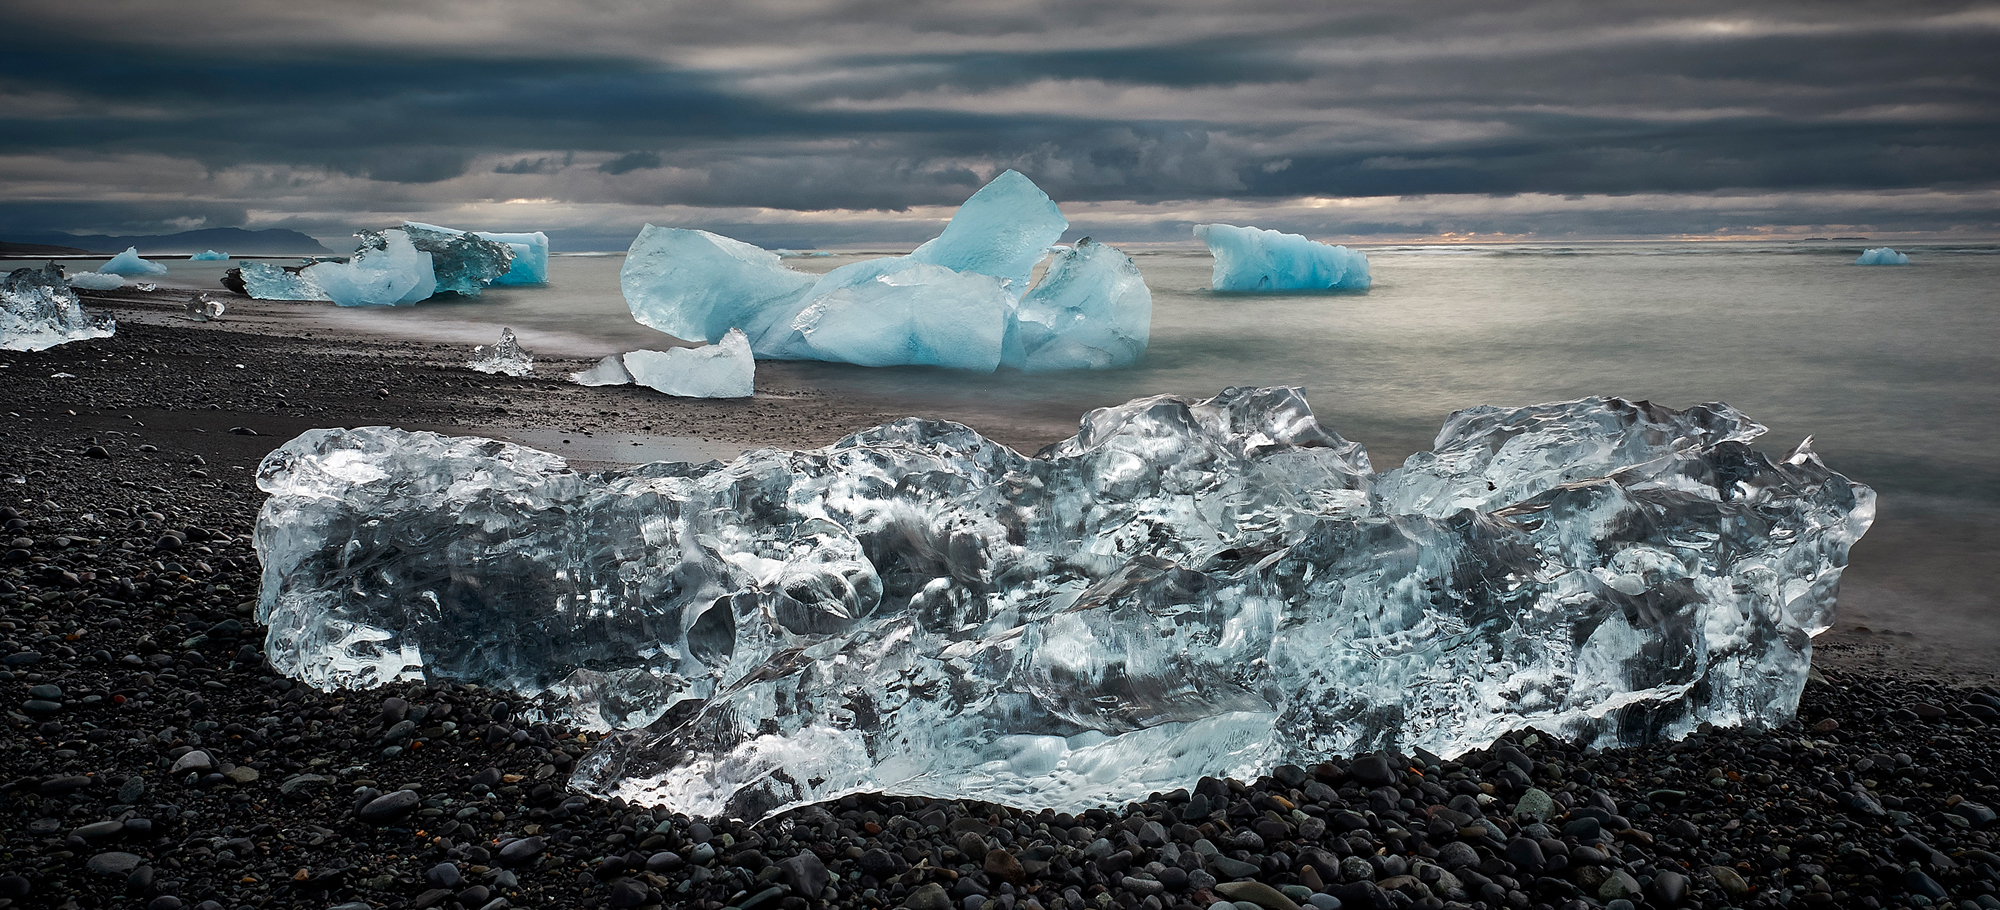 Iceland, Iceberg beach, single exposure pano